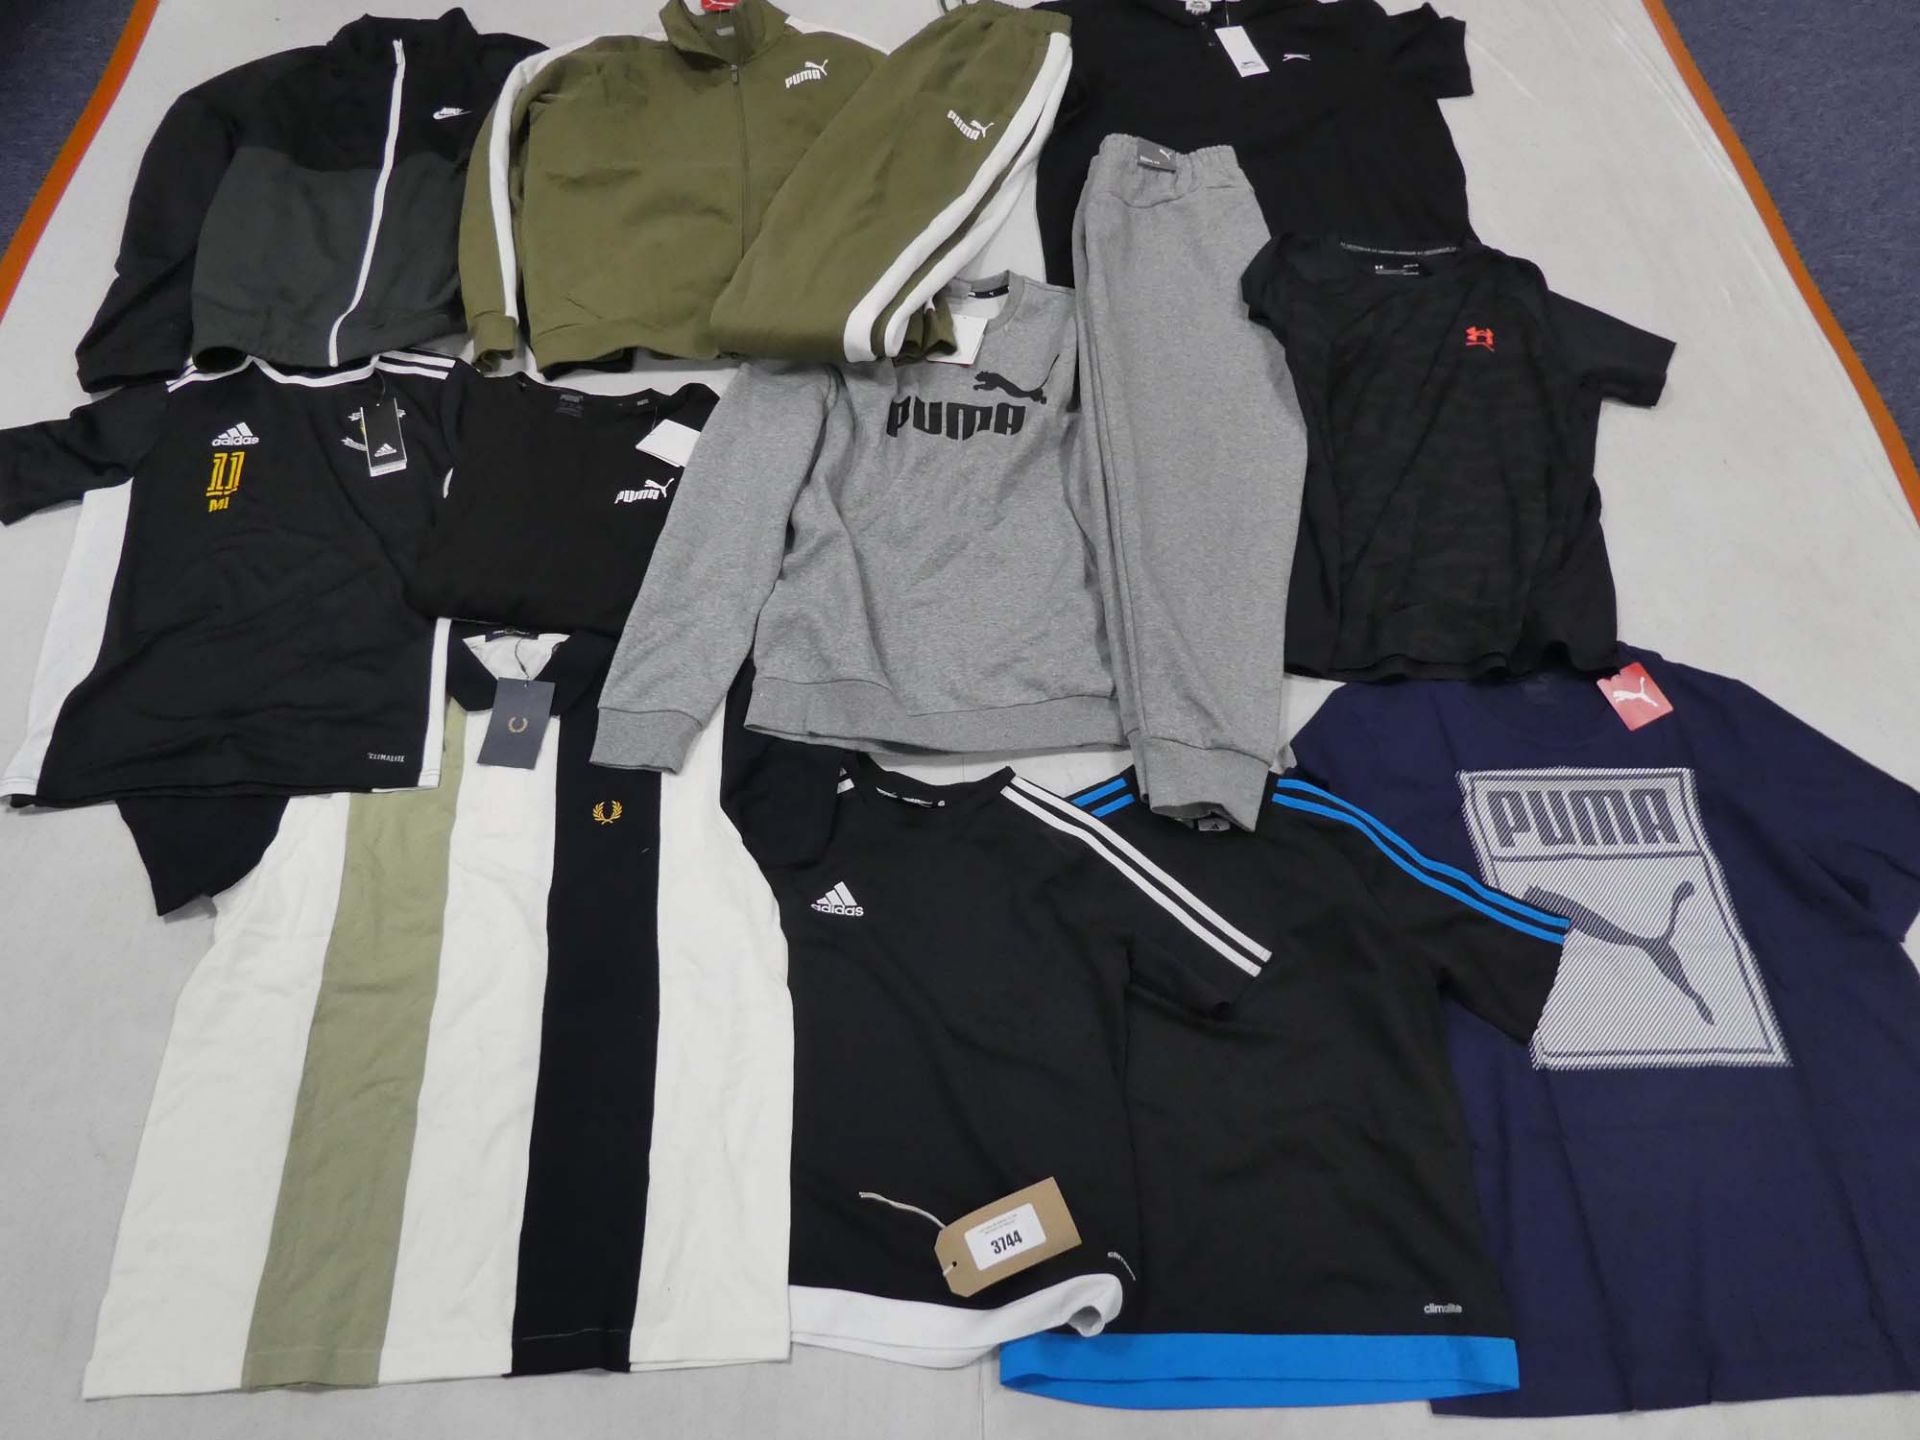 Selection of sportswear to include Puma, Adidas, Nike, etc